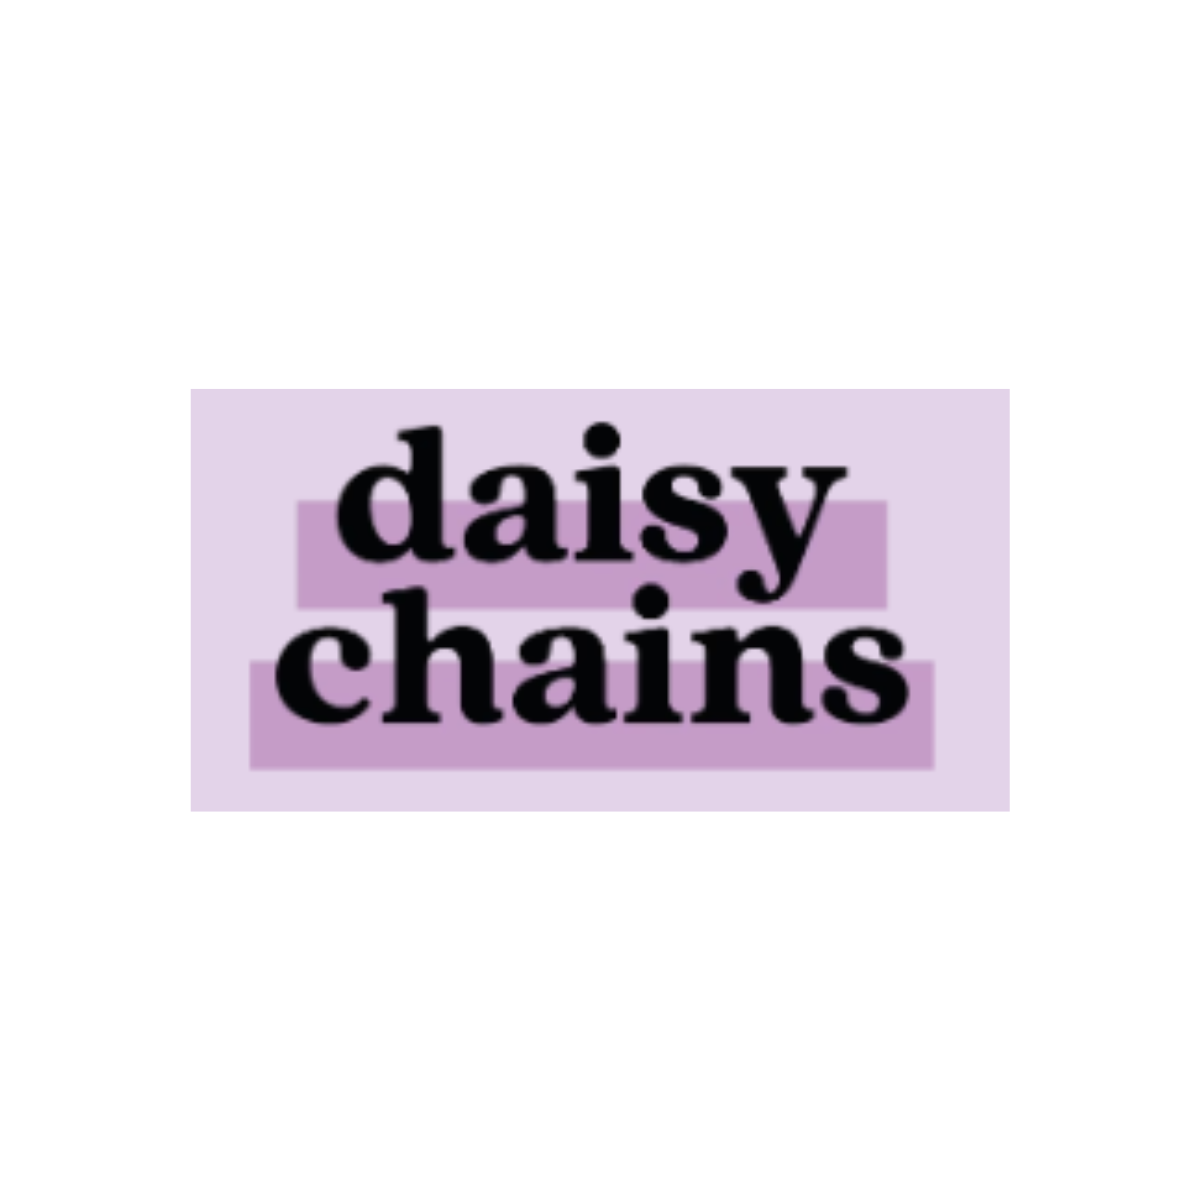 Daisy chains